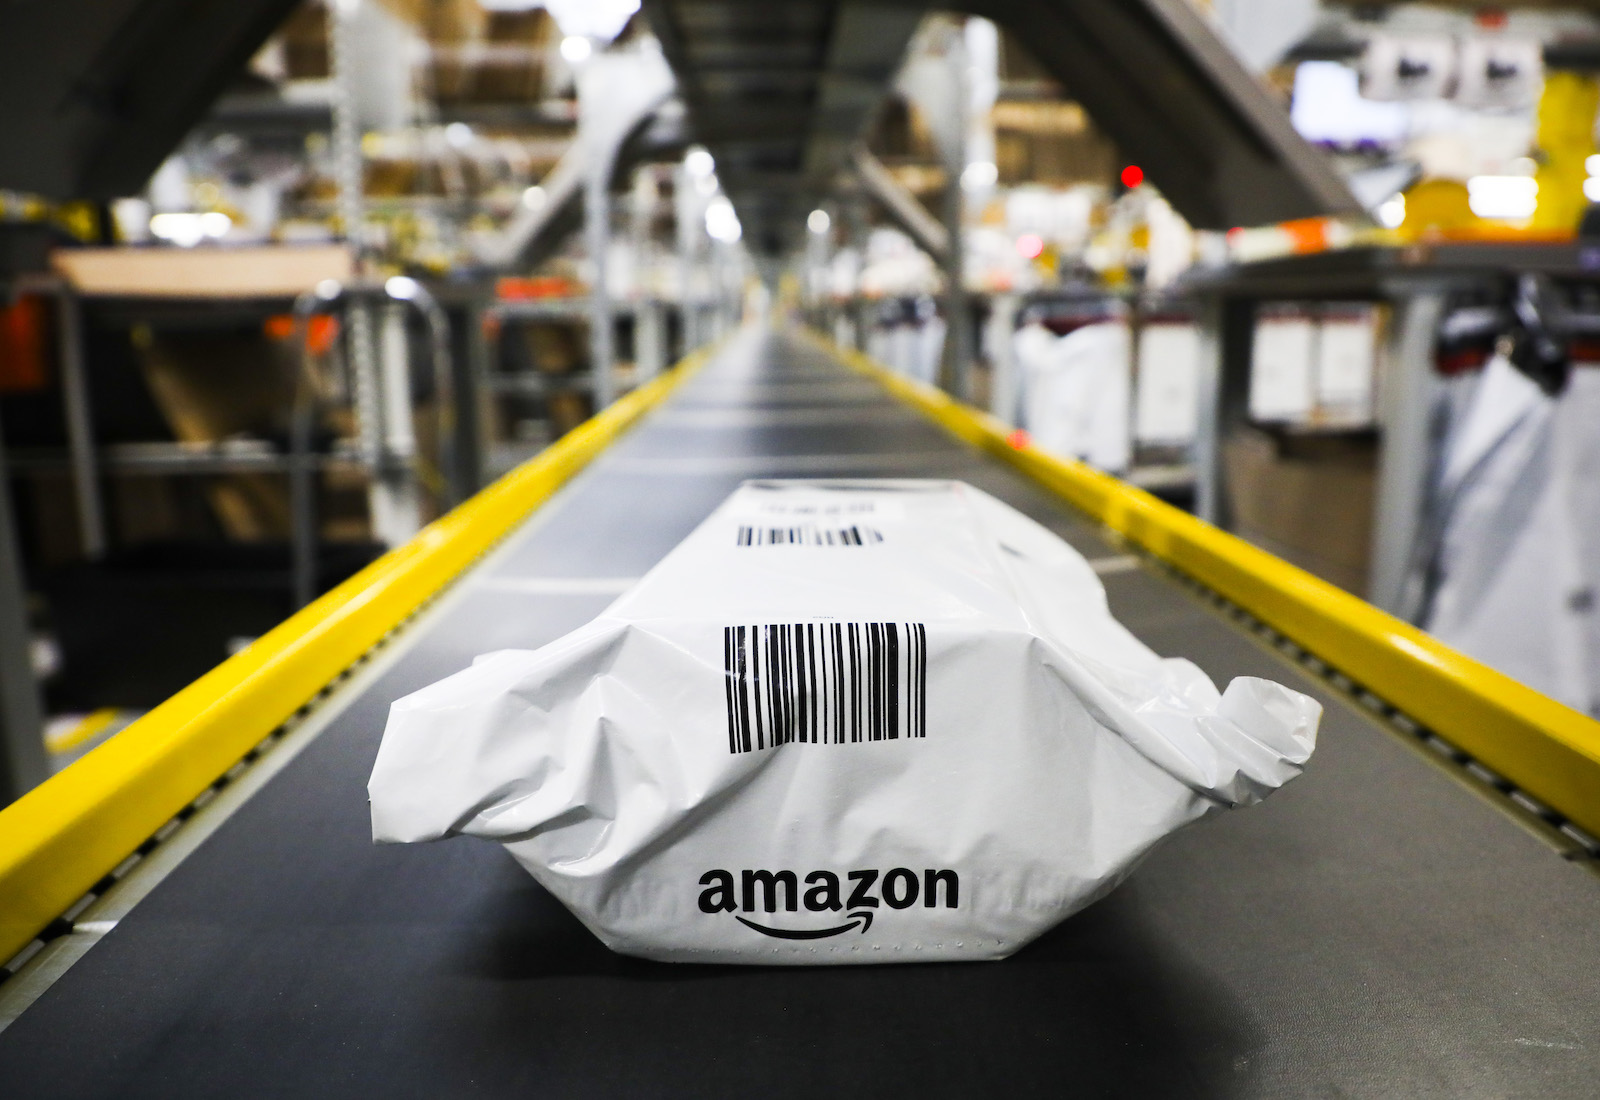 Amazon package on a conveyor belt